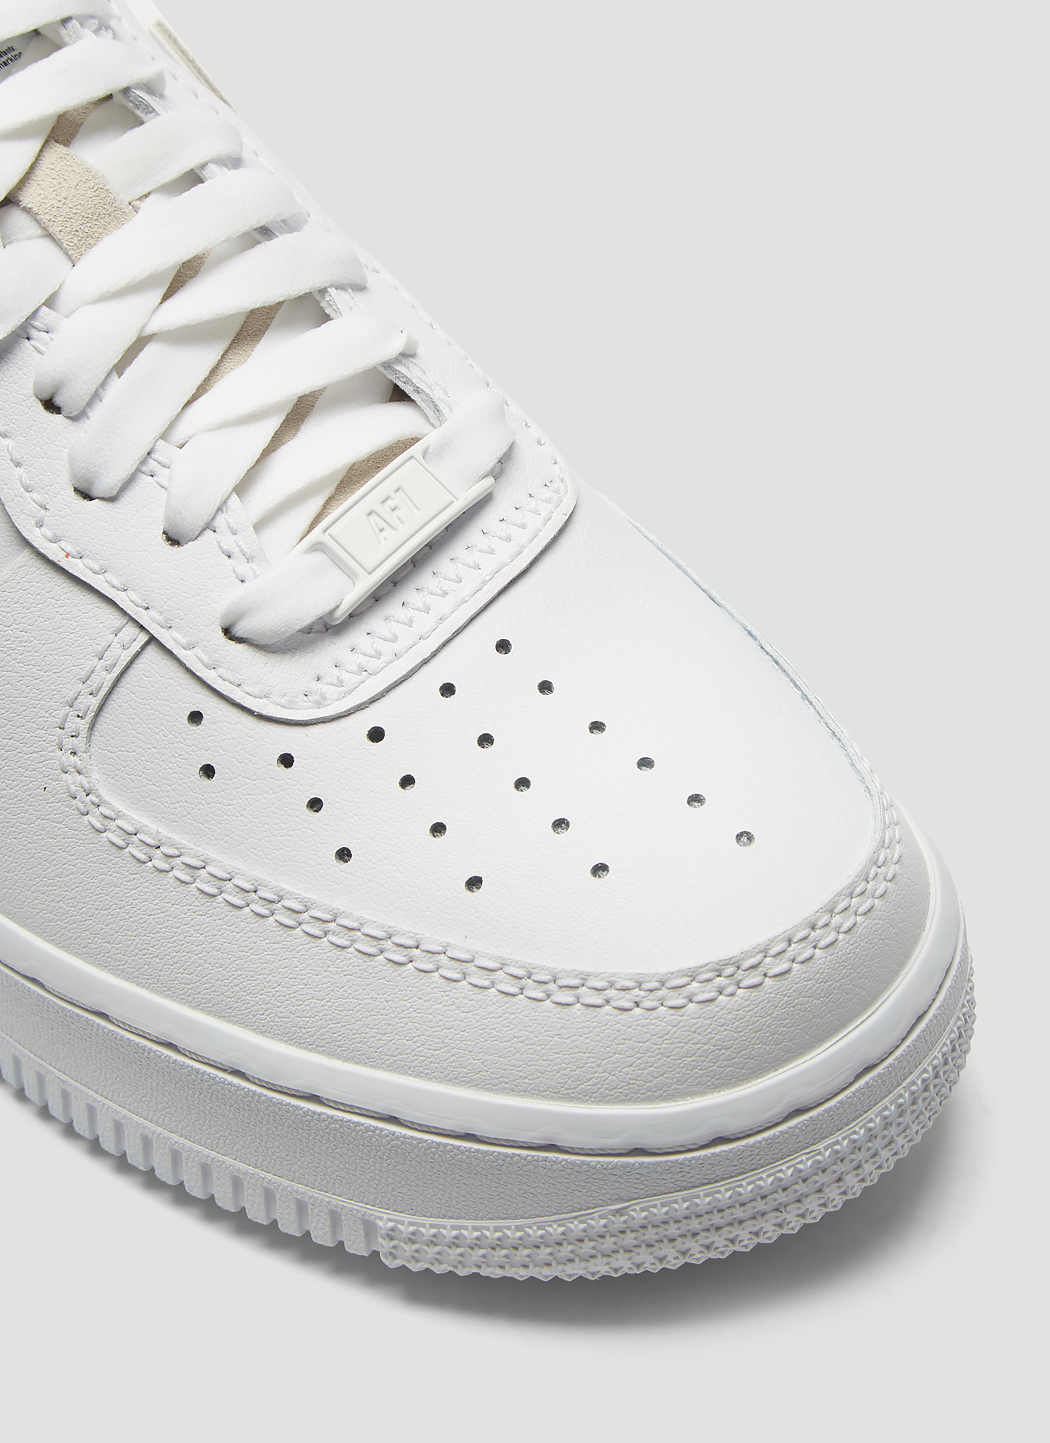 Nike Air Force 1 ’07 Sneaker in White | LN-CC